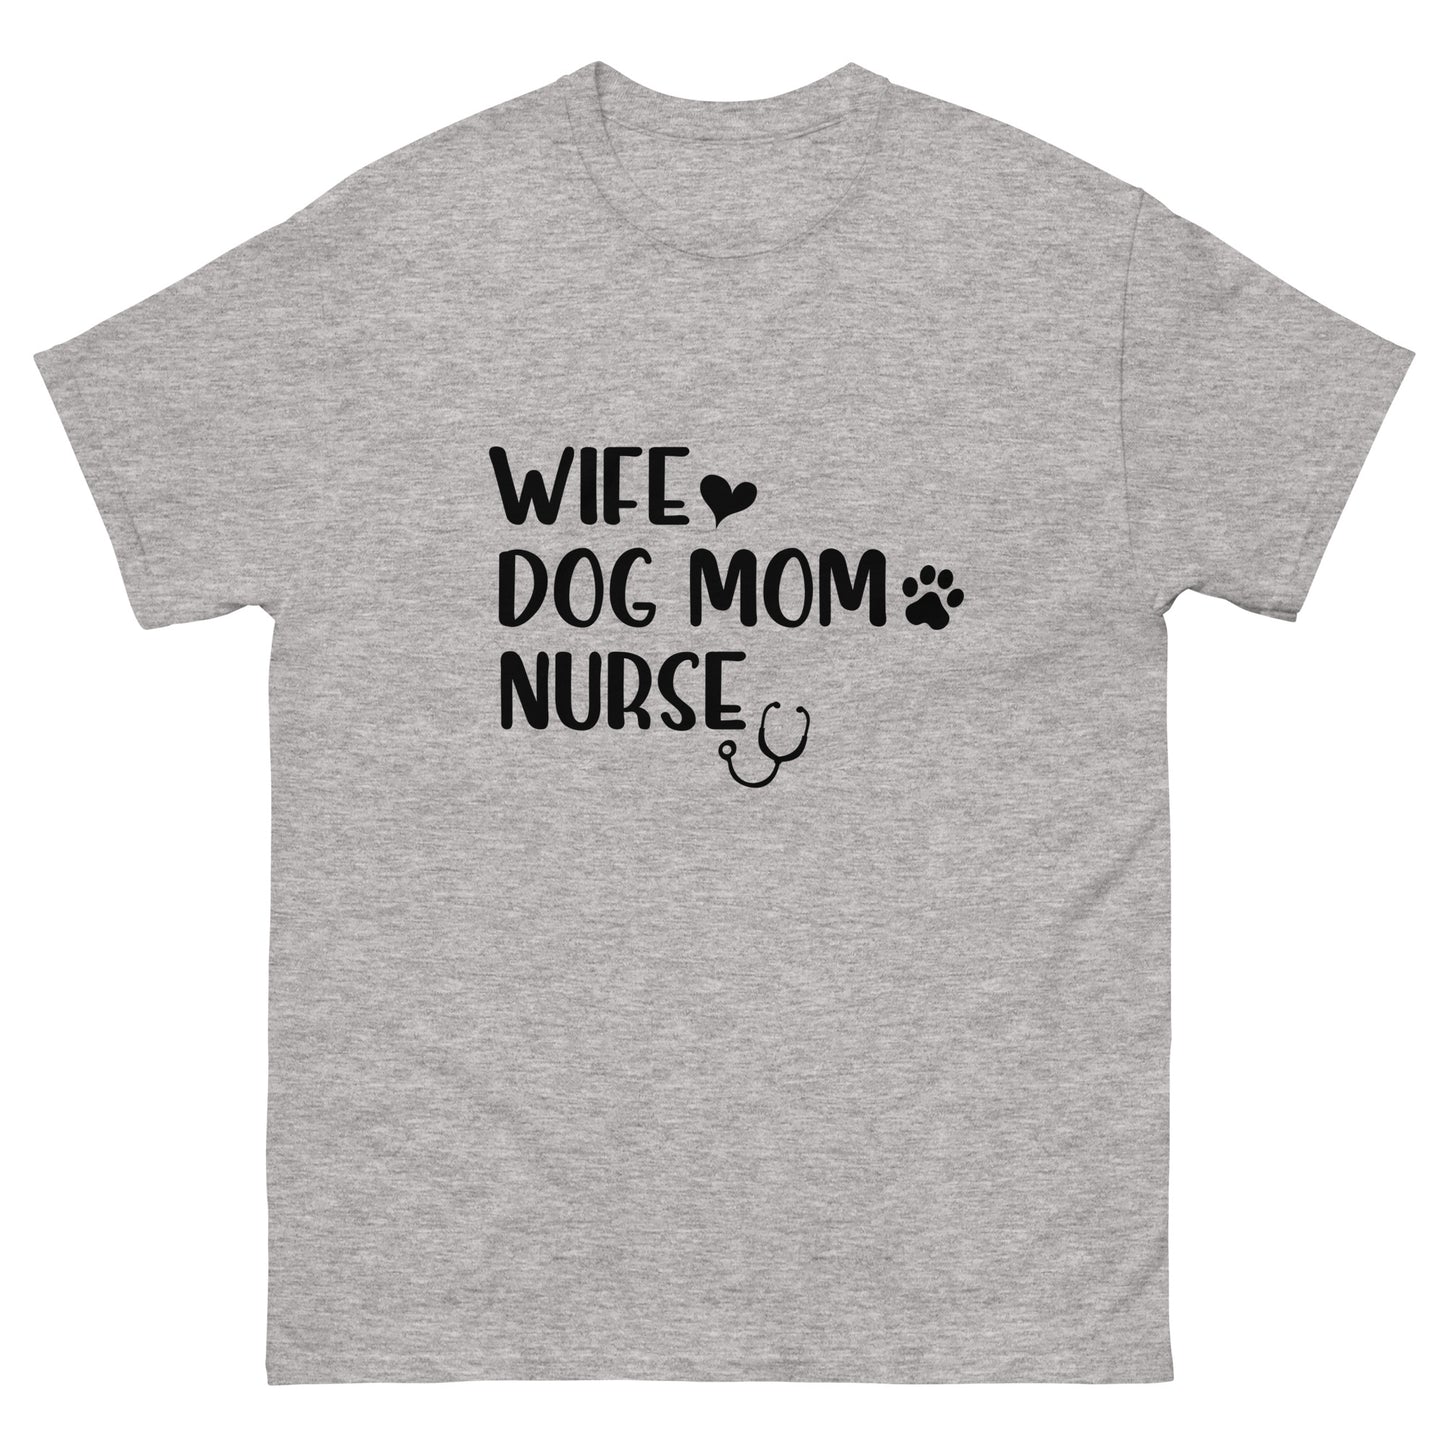 Wife, Dog Mom, Nurse - classic tee